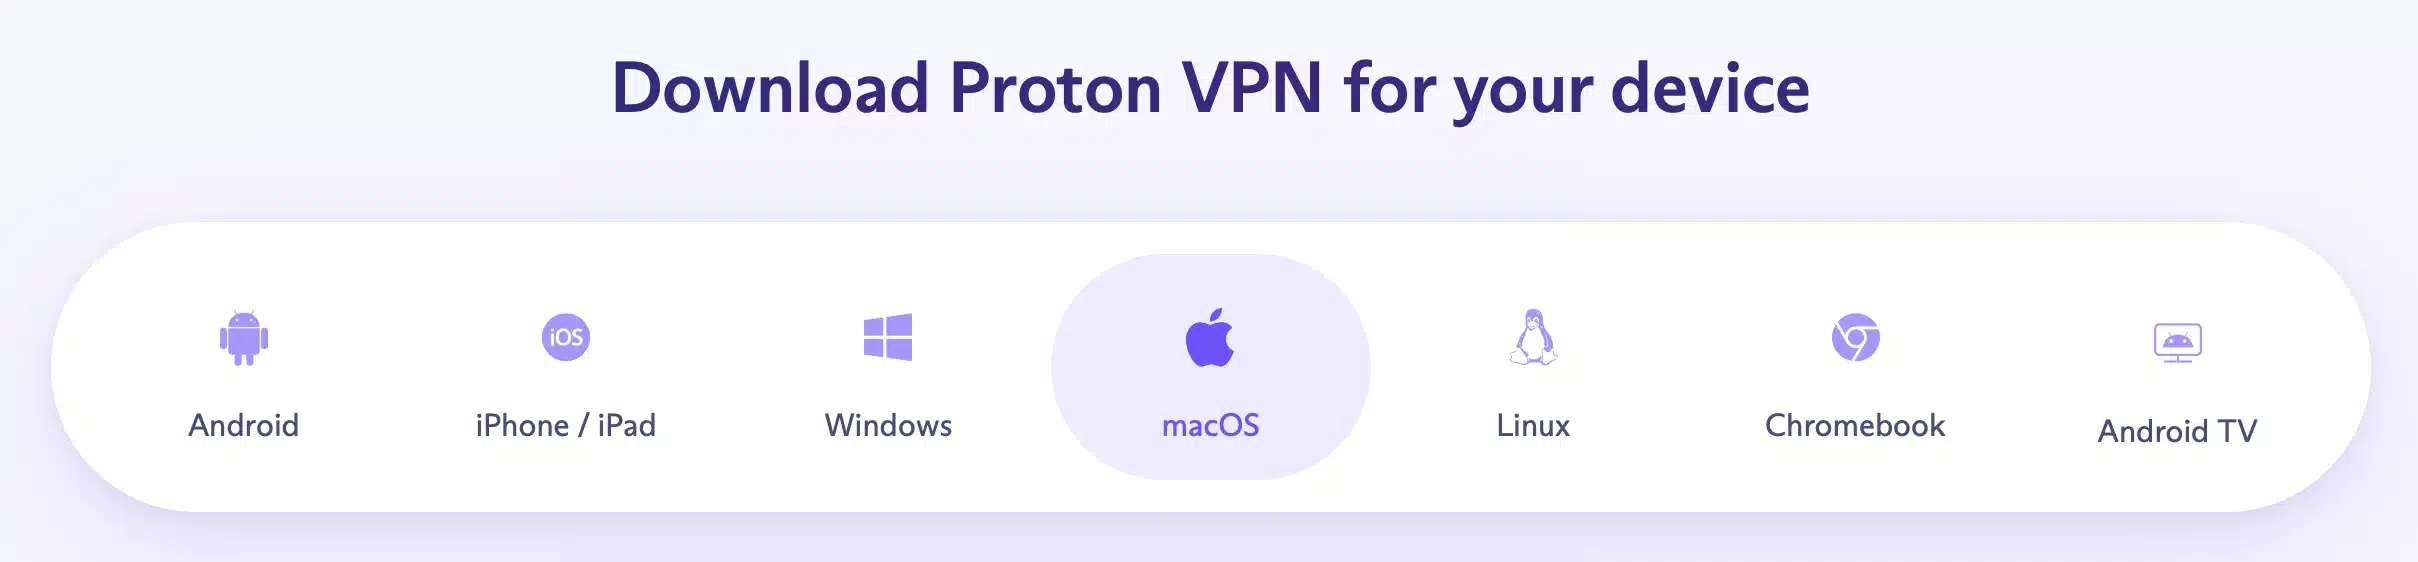 ProtonVPN - Platforms